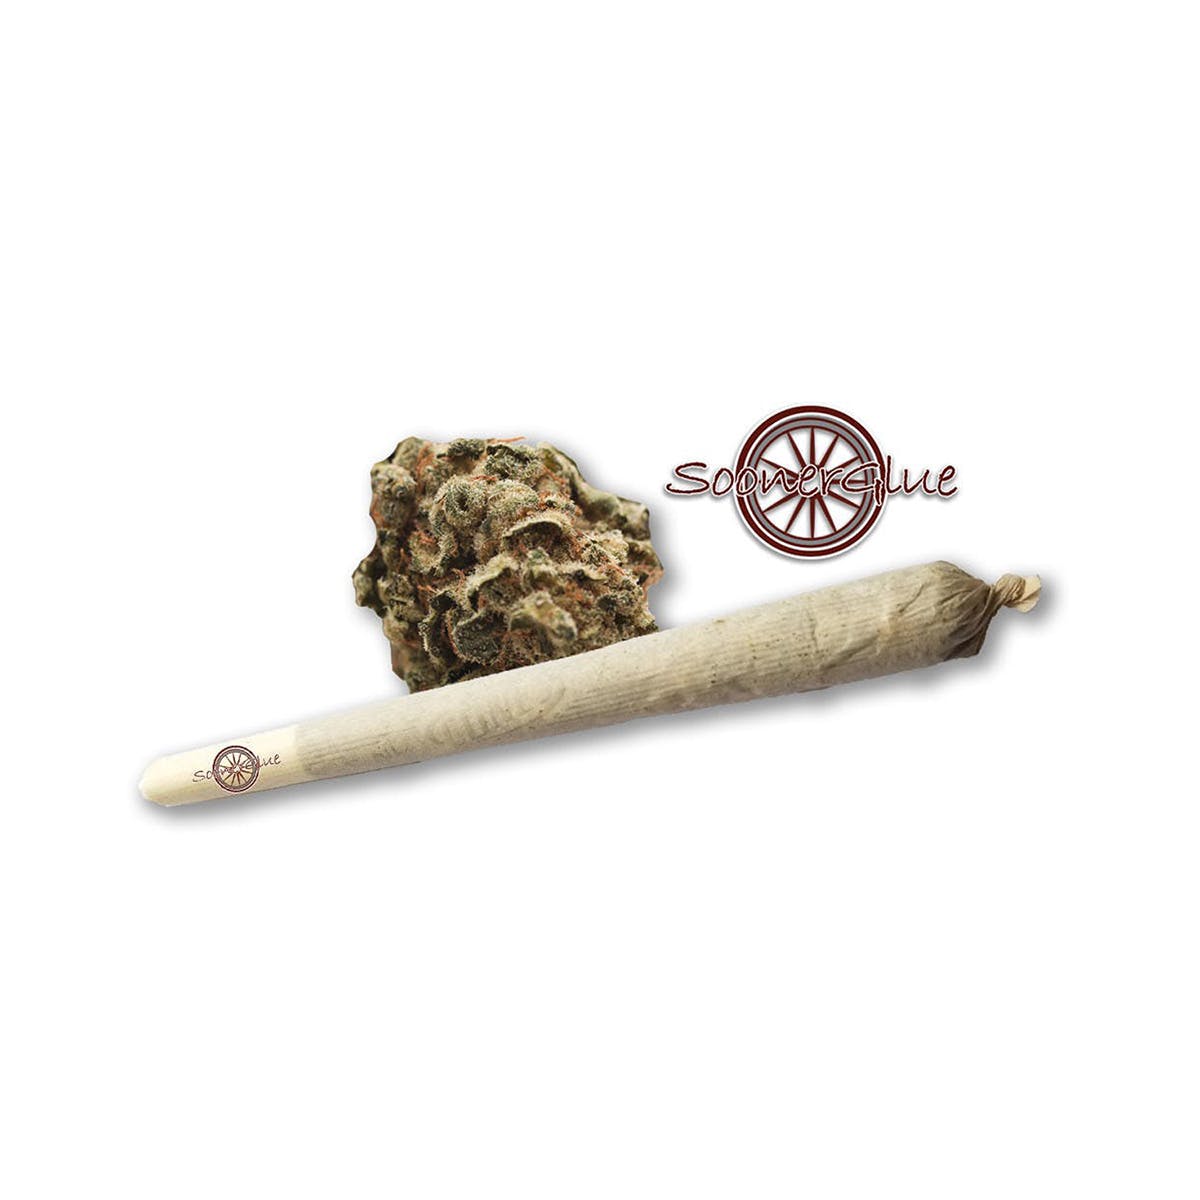 marijuana-dispensaries-the-greenery-in-owasso-sooner-glue-pre-roll